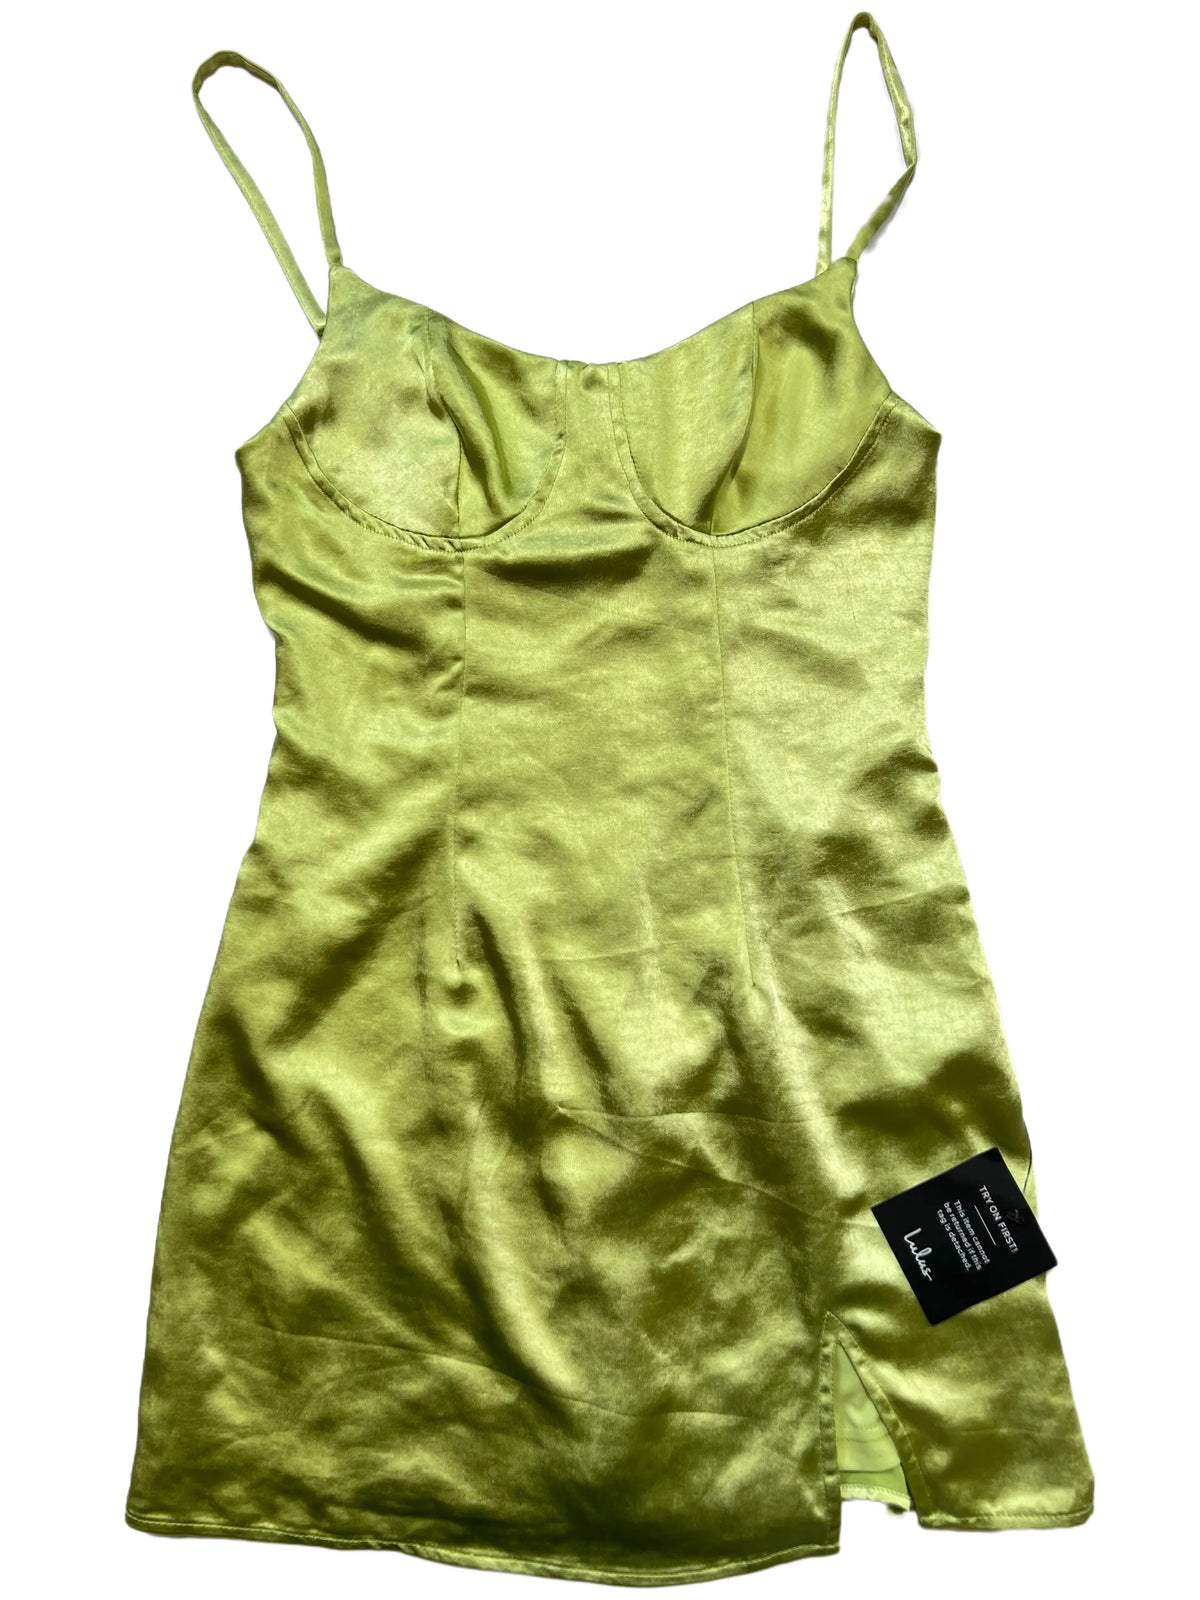 Lulus- Green Silk Mini Dress - NEW WITH TAGS